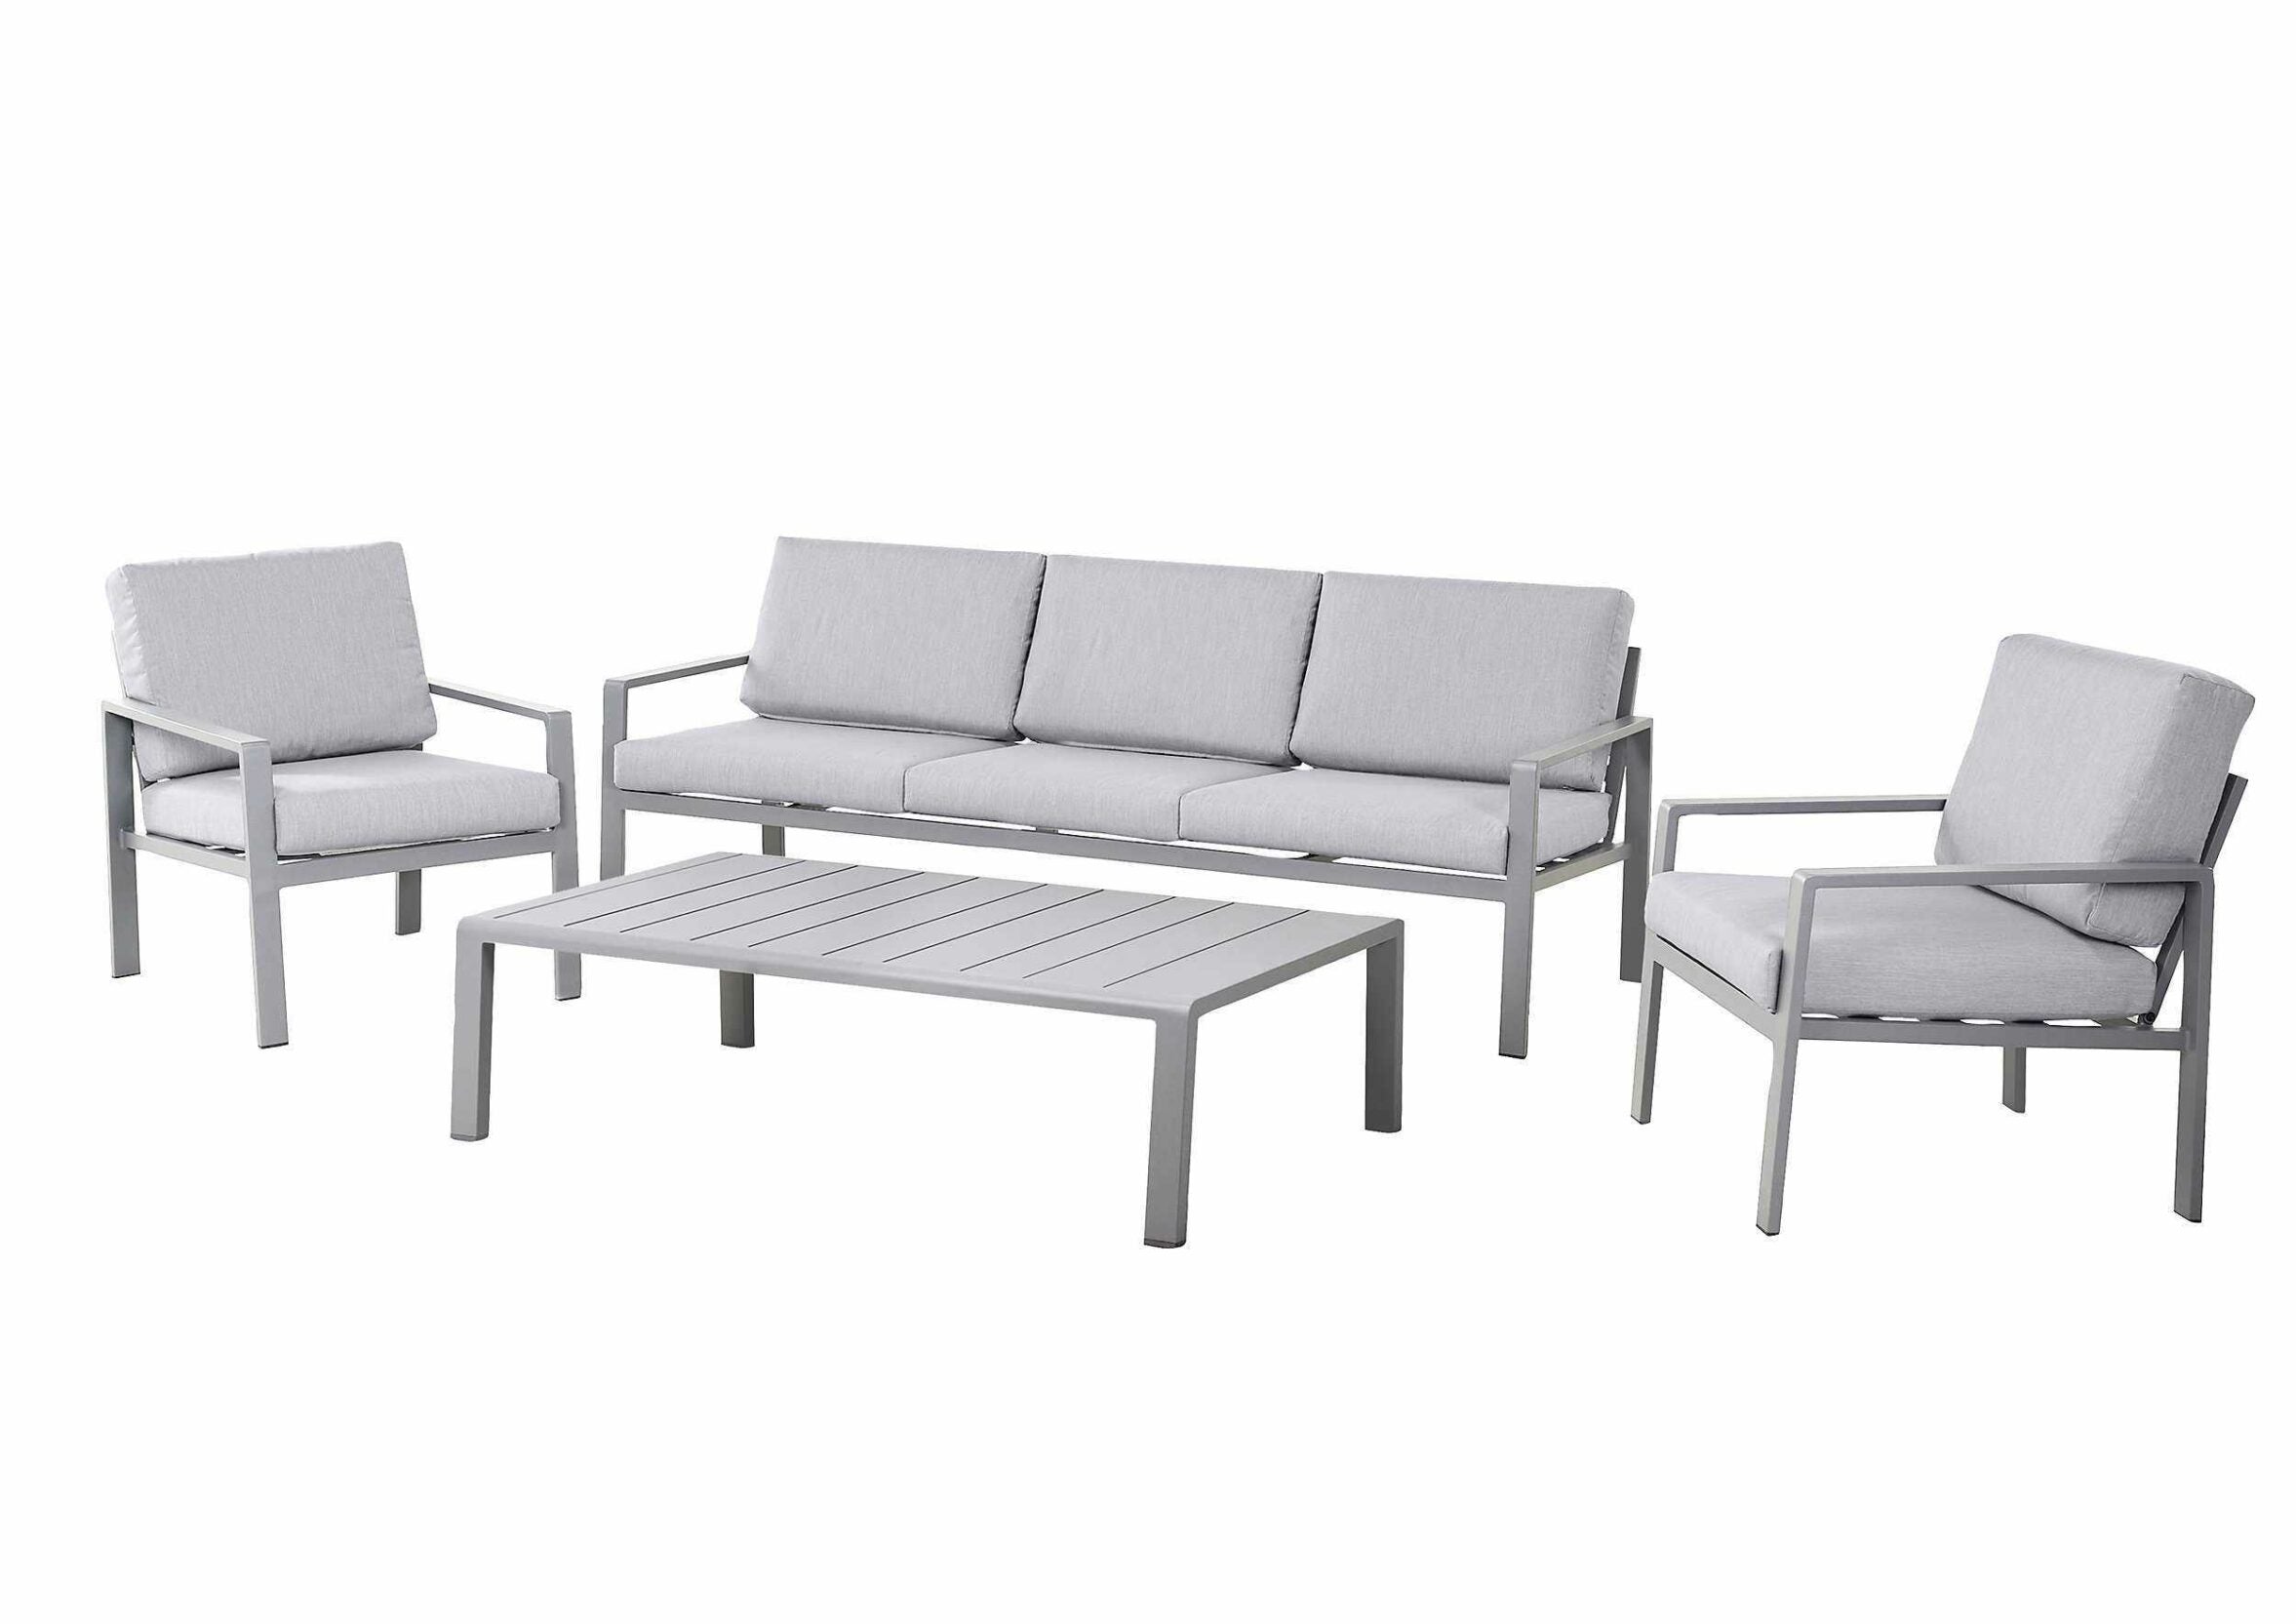 GoodHome Moorea Steel grey 5 Seater Coffee set- Garden Furniture -7639